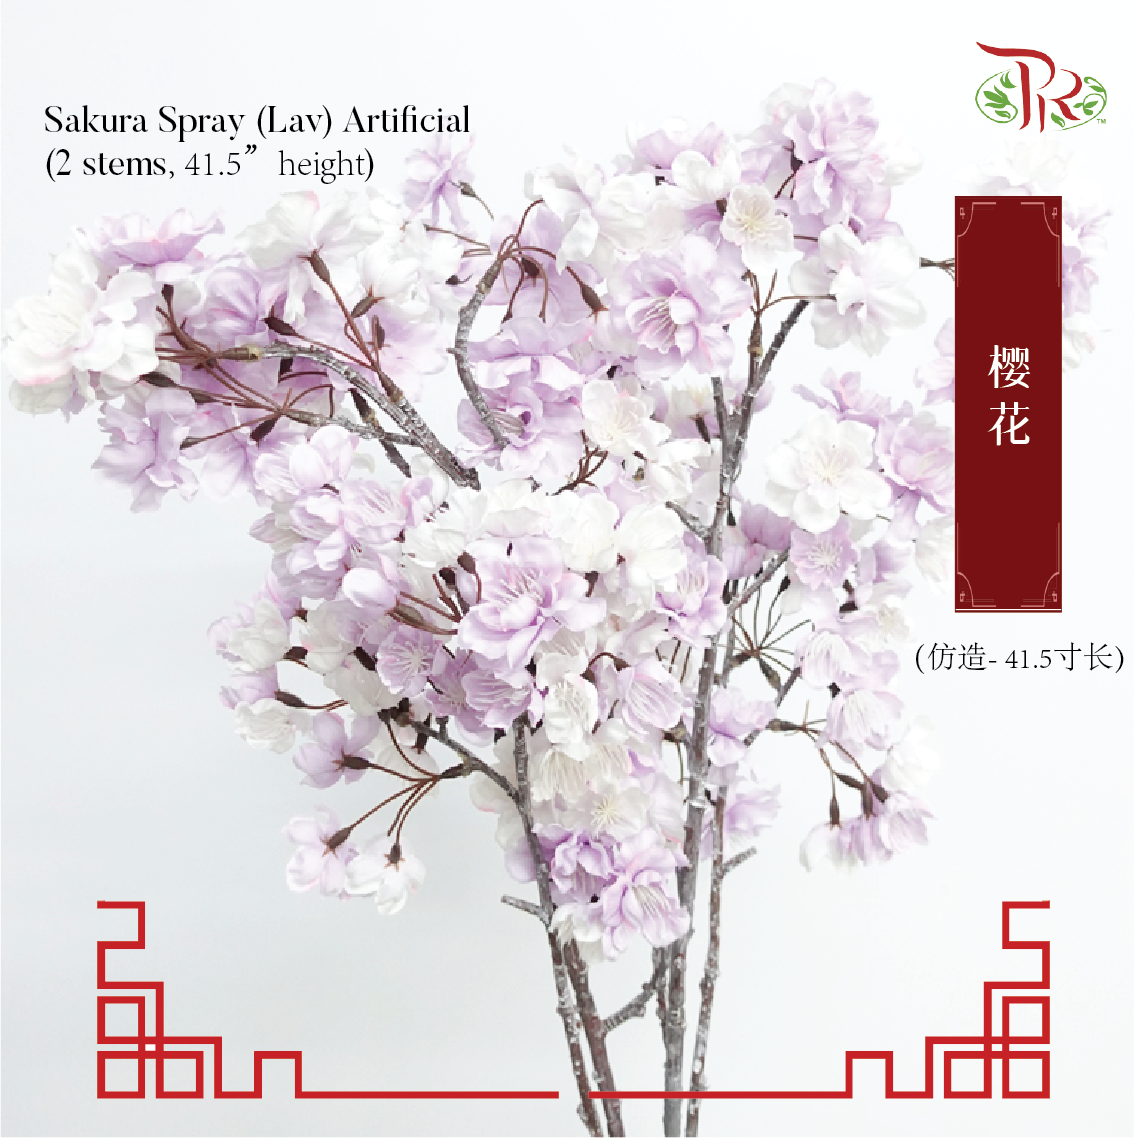 Sakura Spray Artificial- Lav (2 Stems) - Pudu Ria Florist